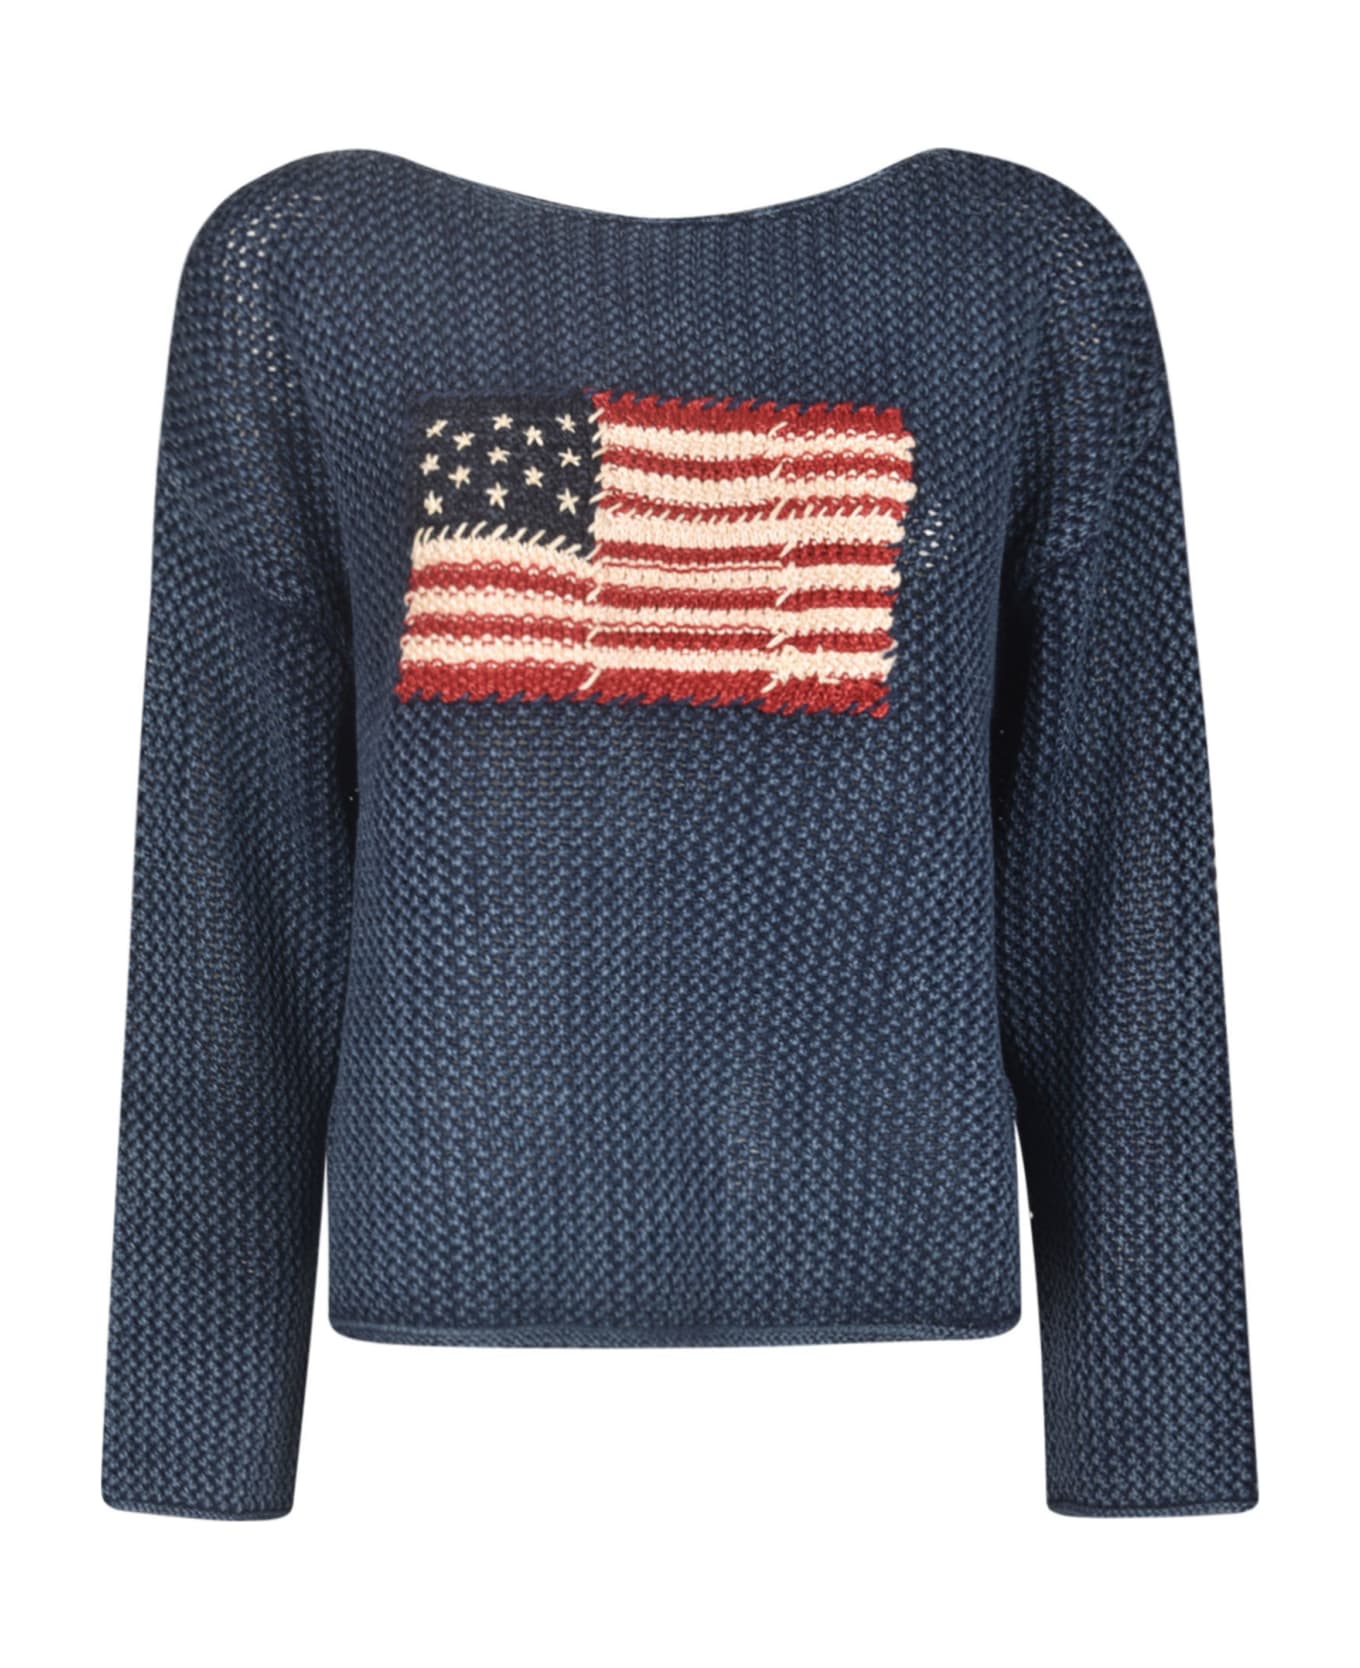 Polo Ralph Lauren American Flag Crocket Sweatshirt - Blue